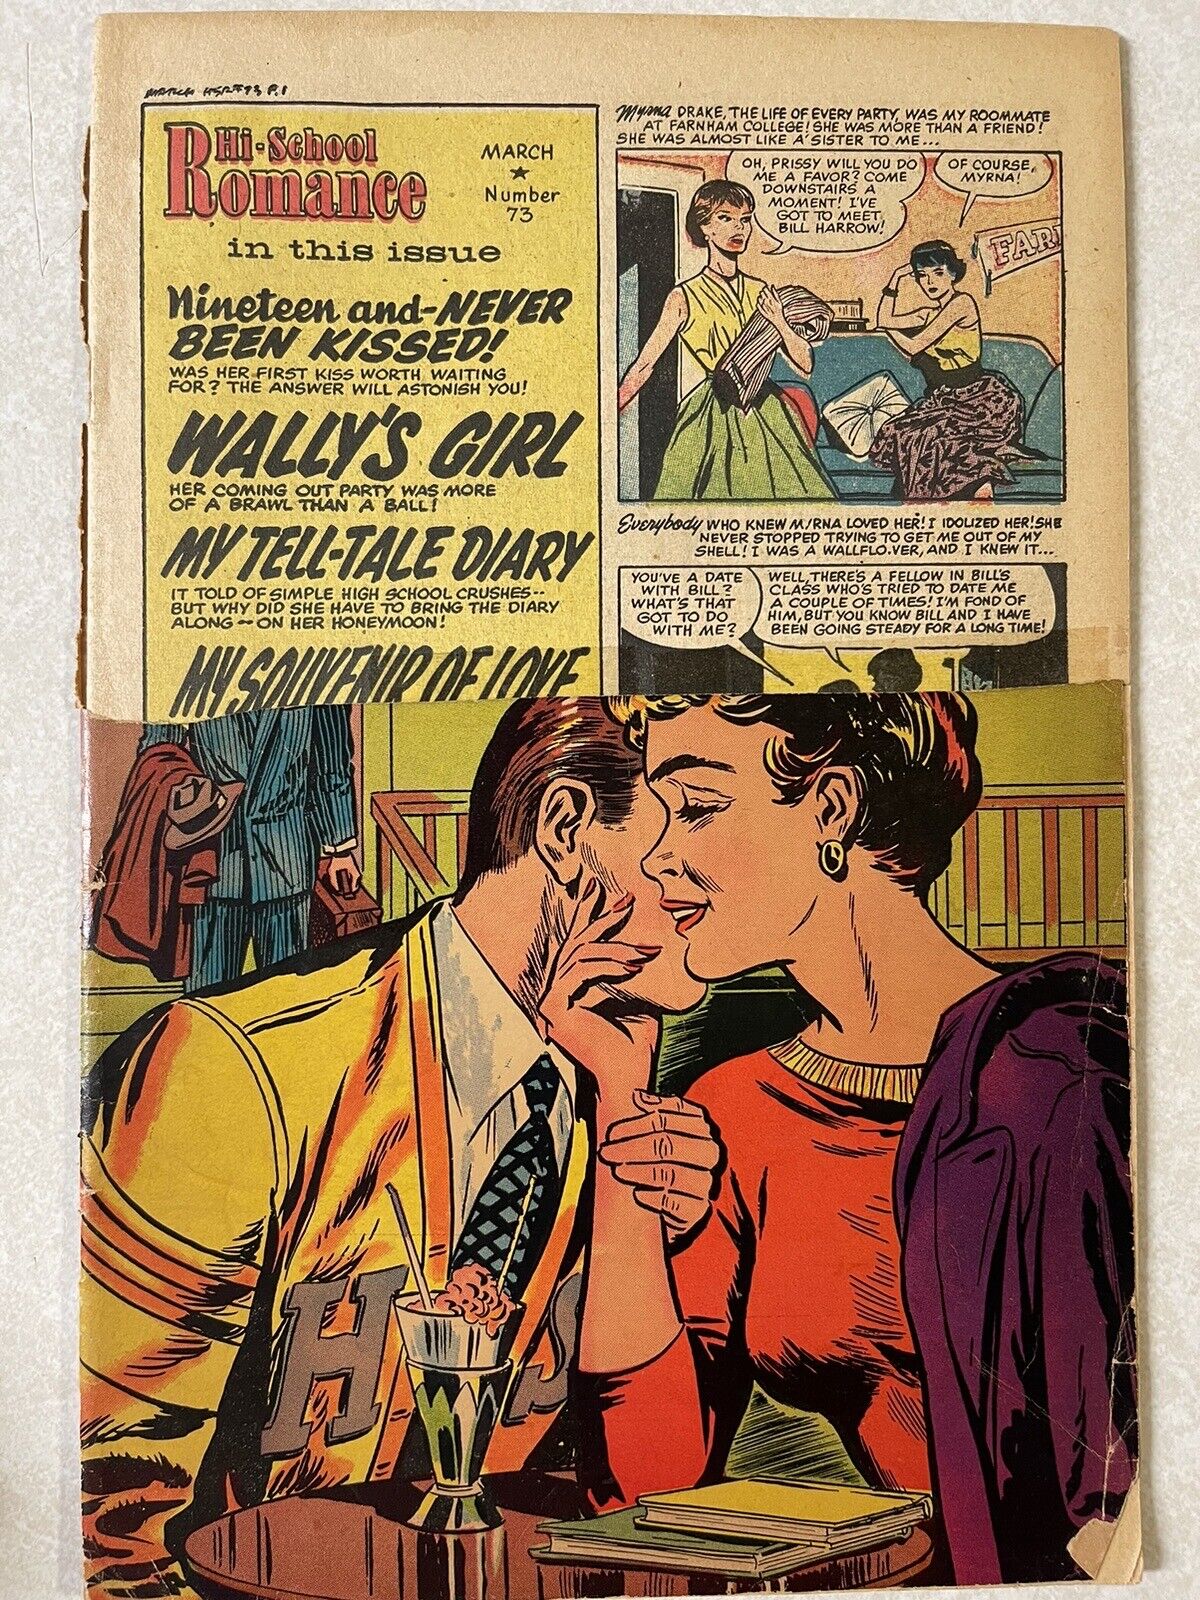 Hi-School Romance #73 Silver Age 1958 Harvey Comics